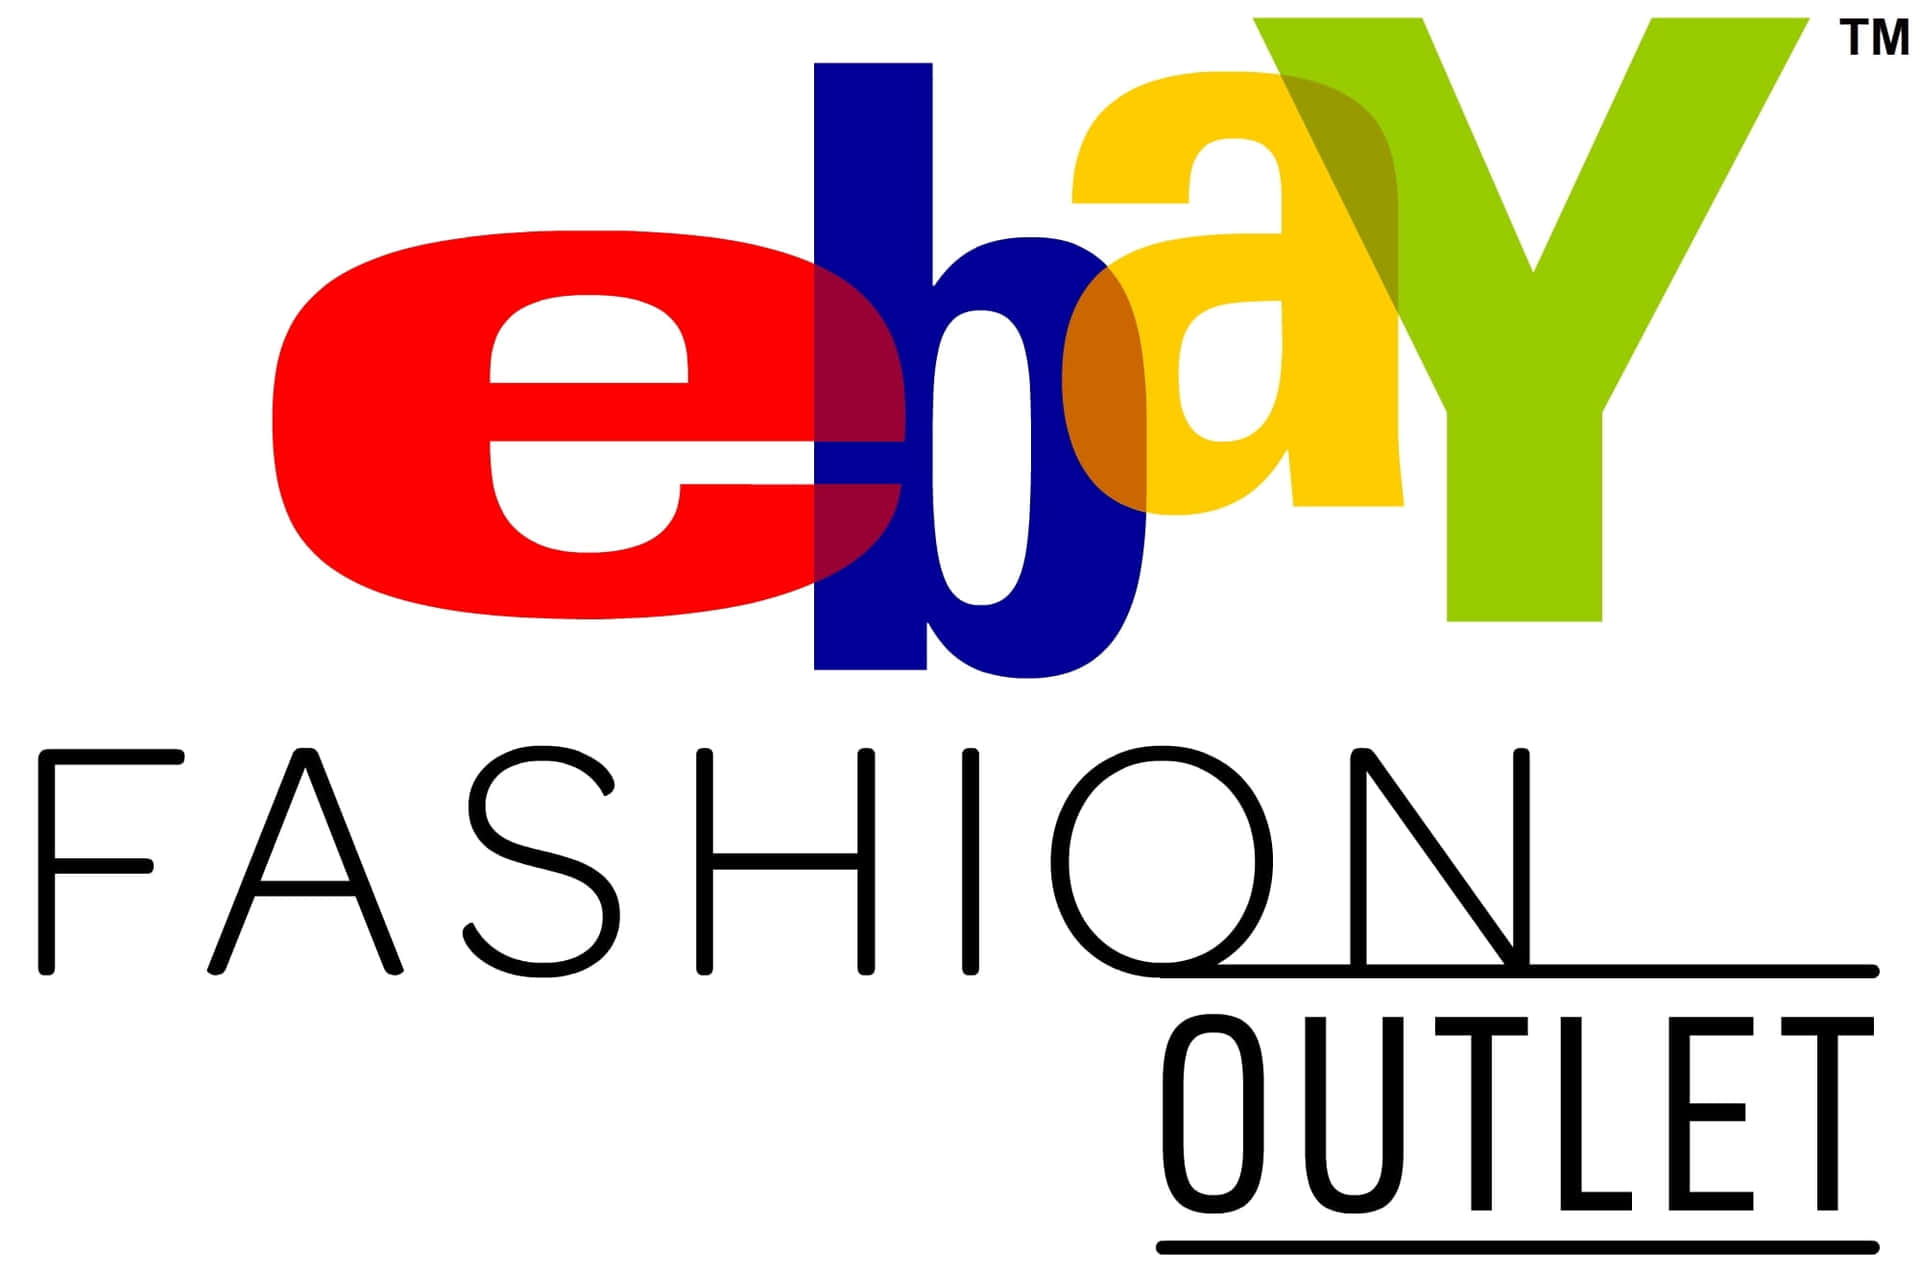 Ebayuk Logo Fashion Outlet: Ebay Uk Logo Fashion Outlet Wallpaper